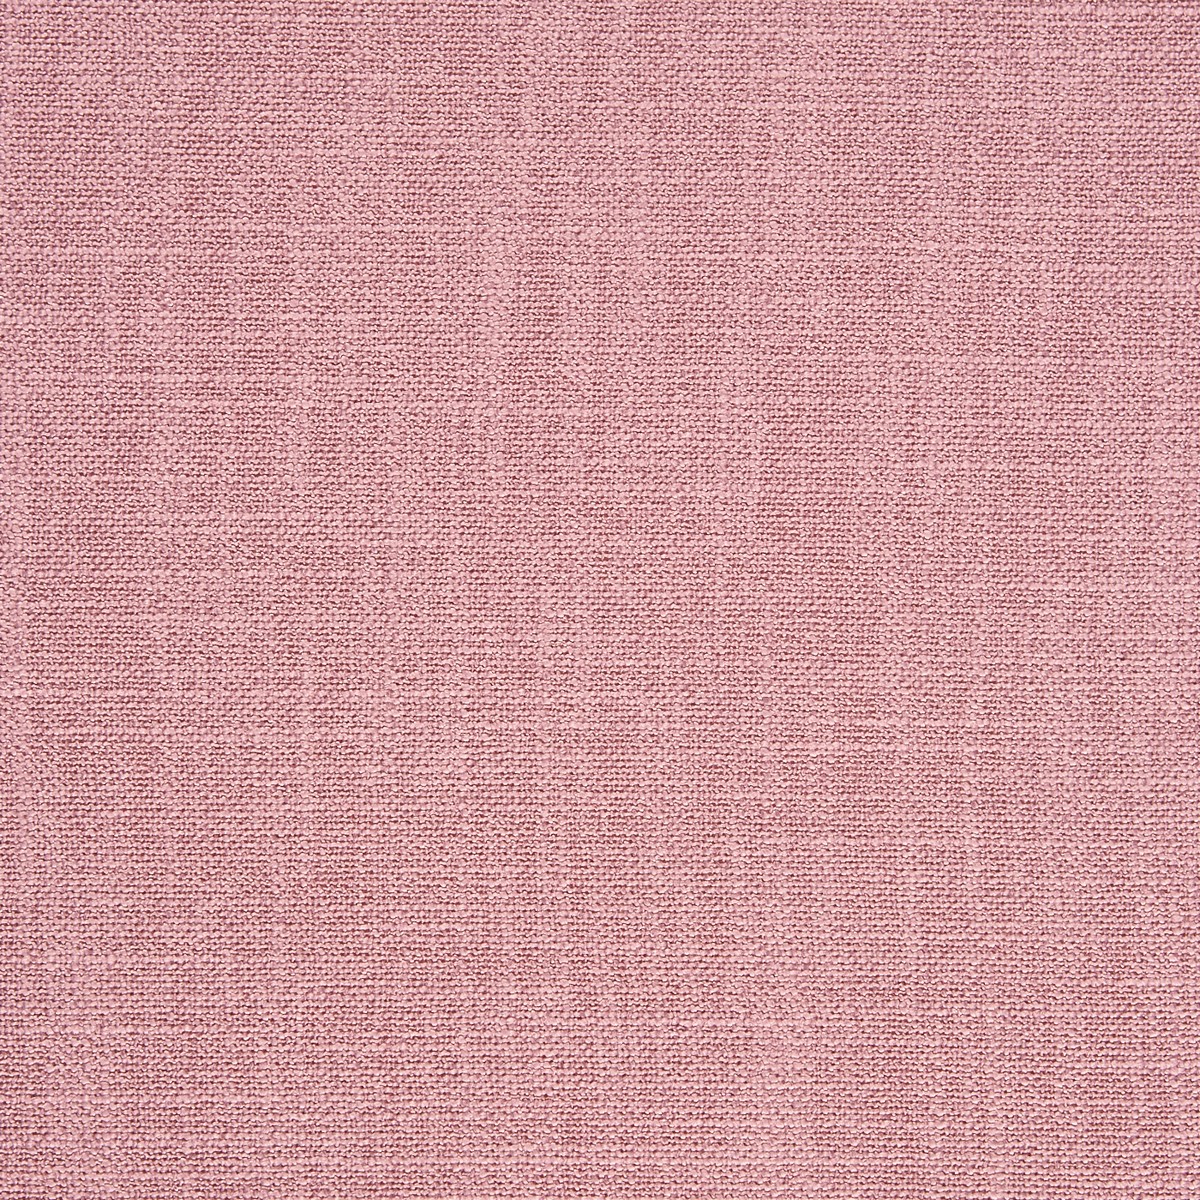 Whisp Blossom Fabric by Prestigious Textiles